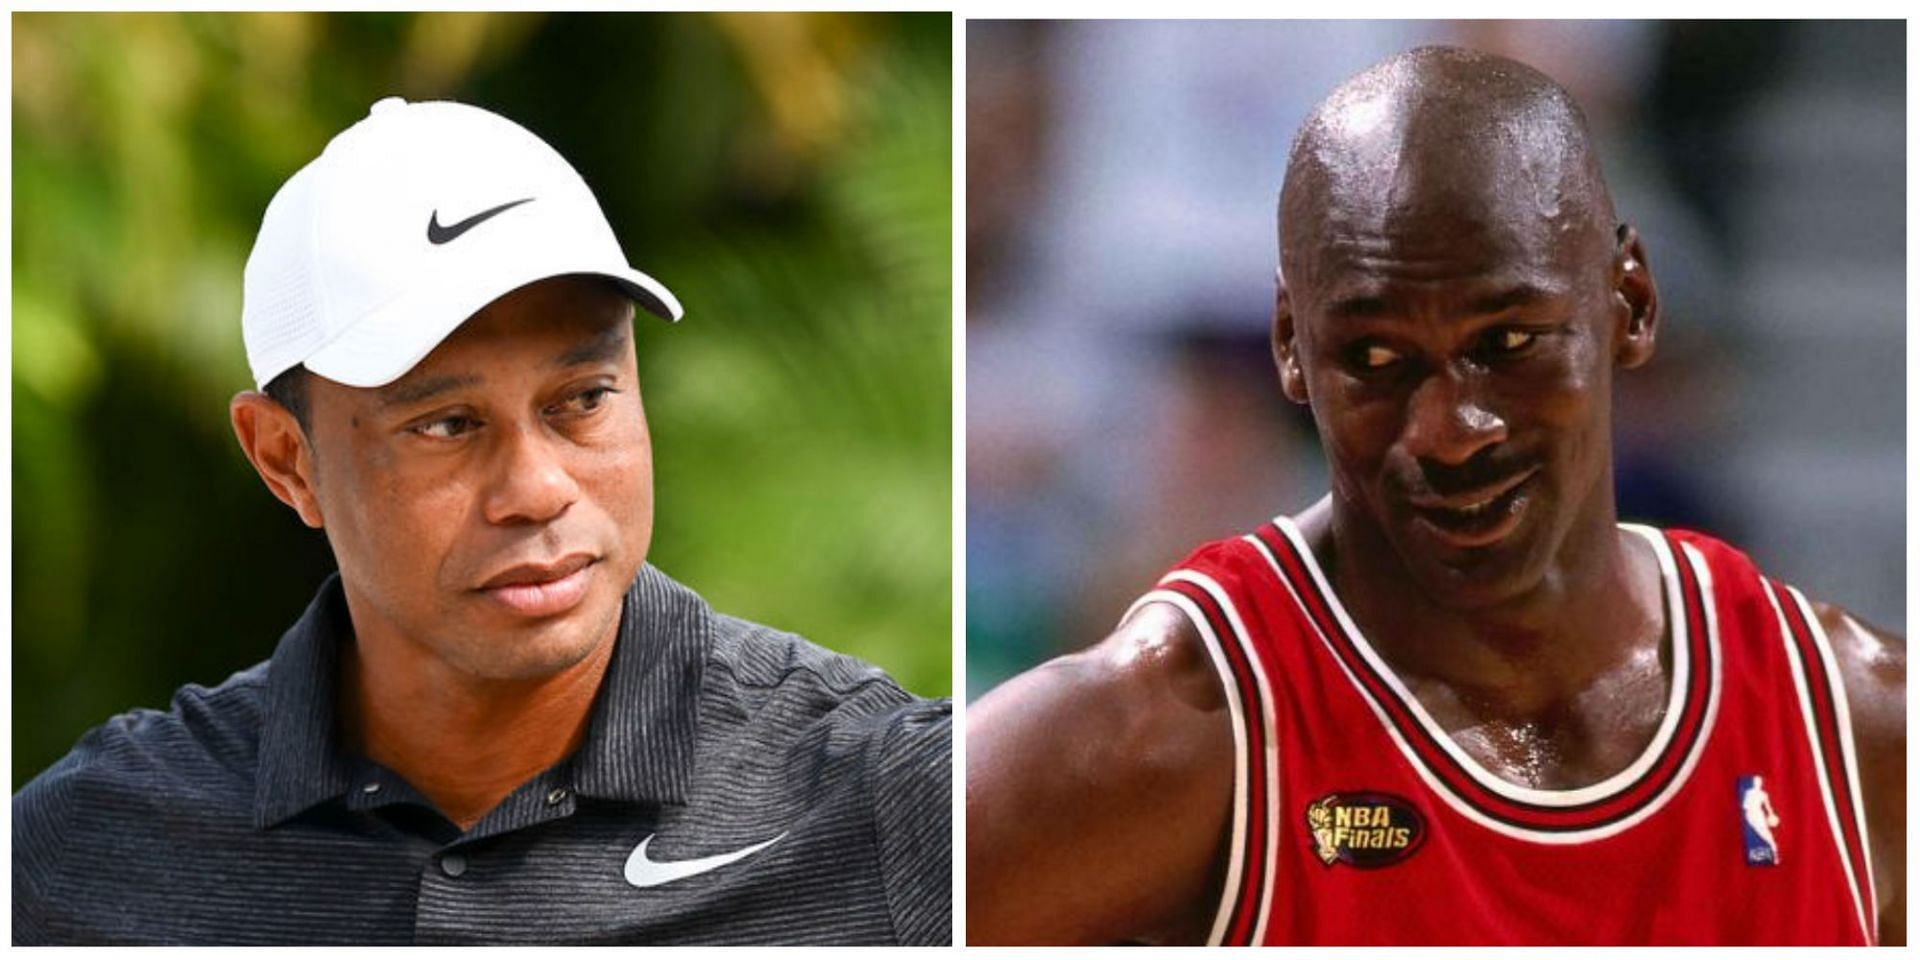 Tiger Woods looked up to Michael Jordan.